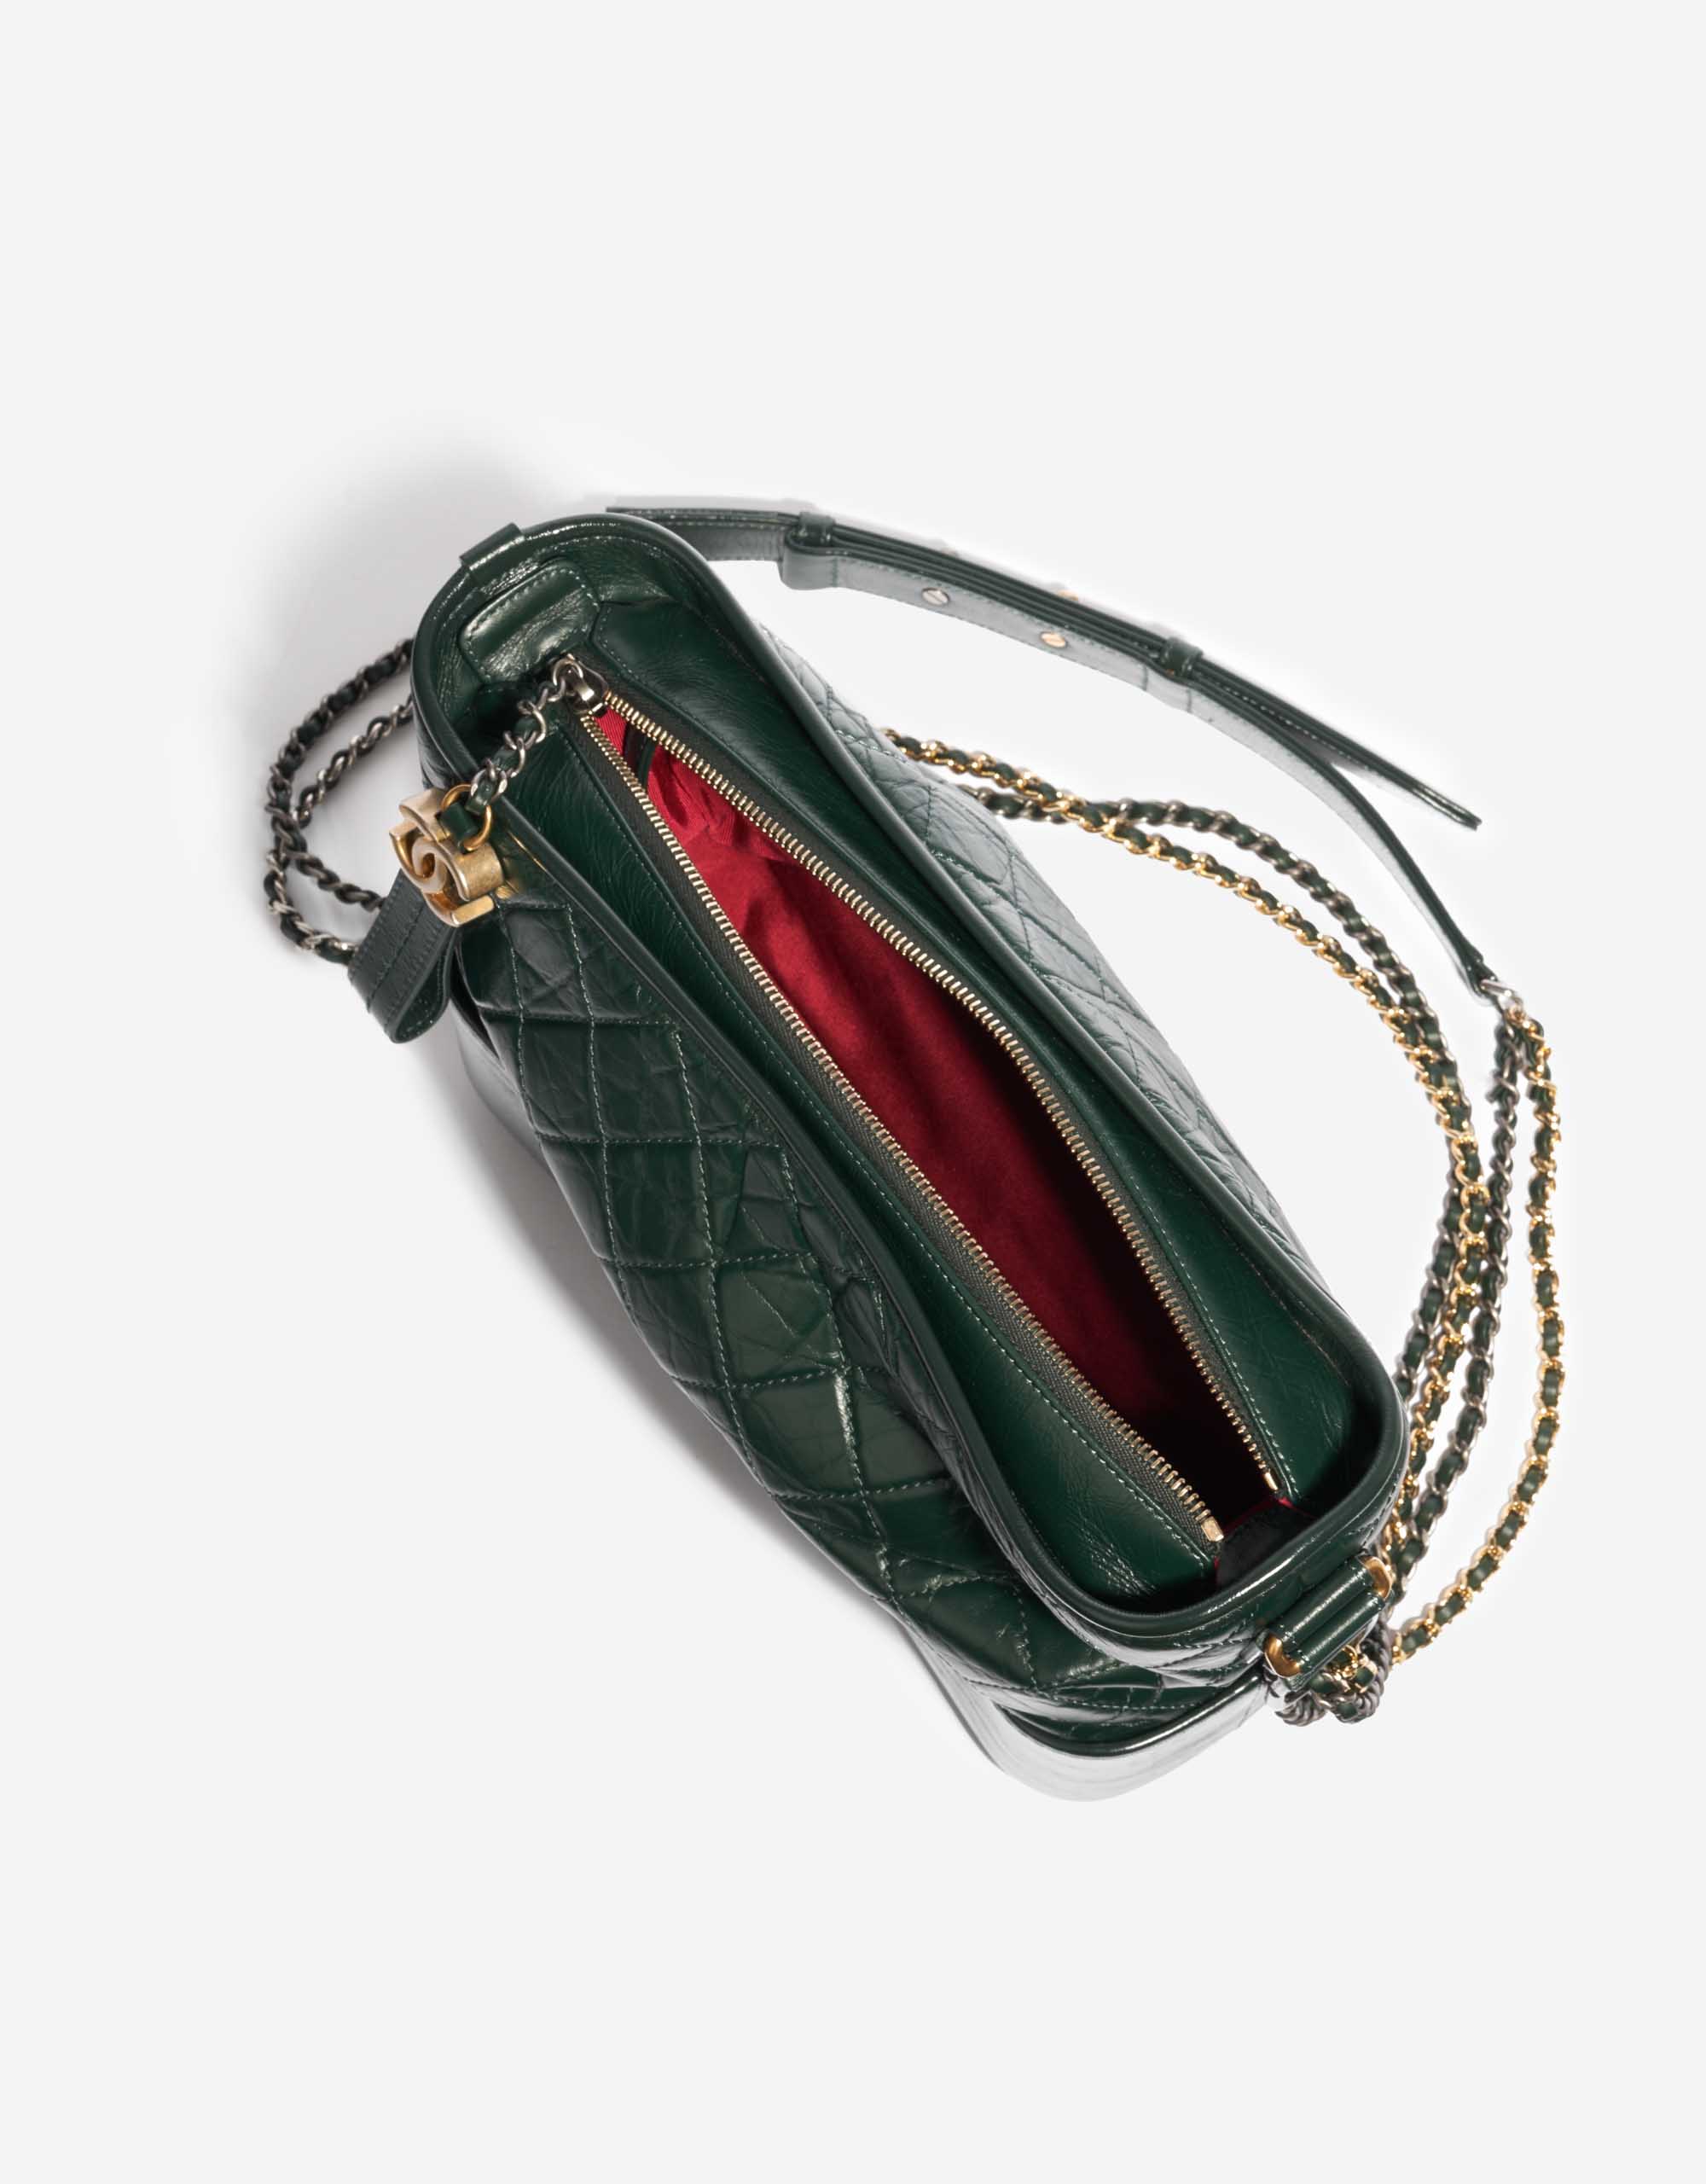 LoVey Goody - 💚New Unused Chanel Gabrielle Hobo in Green